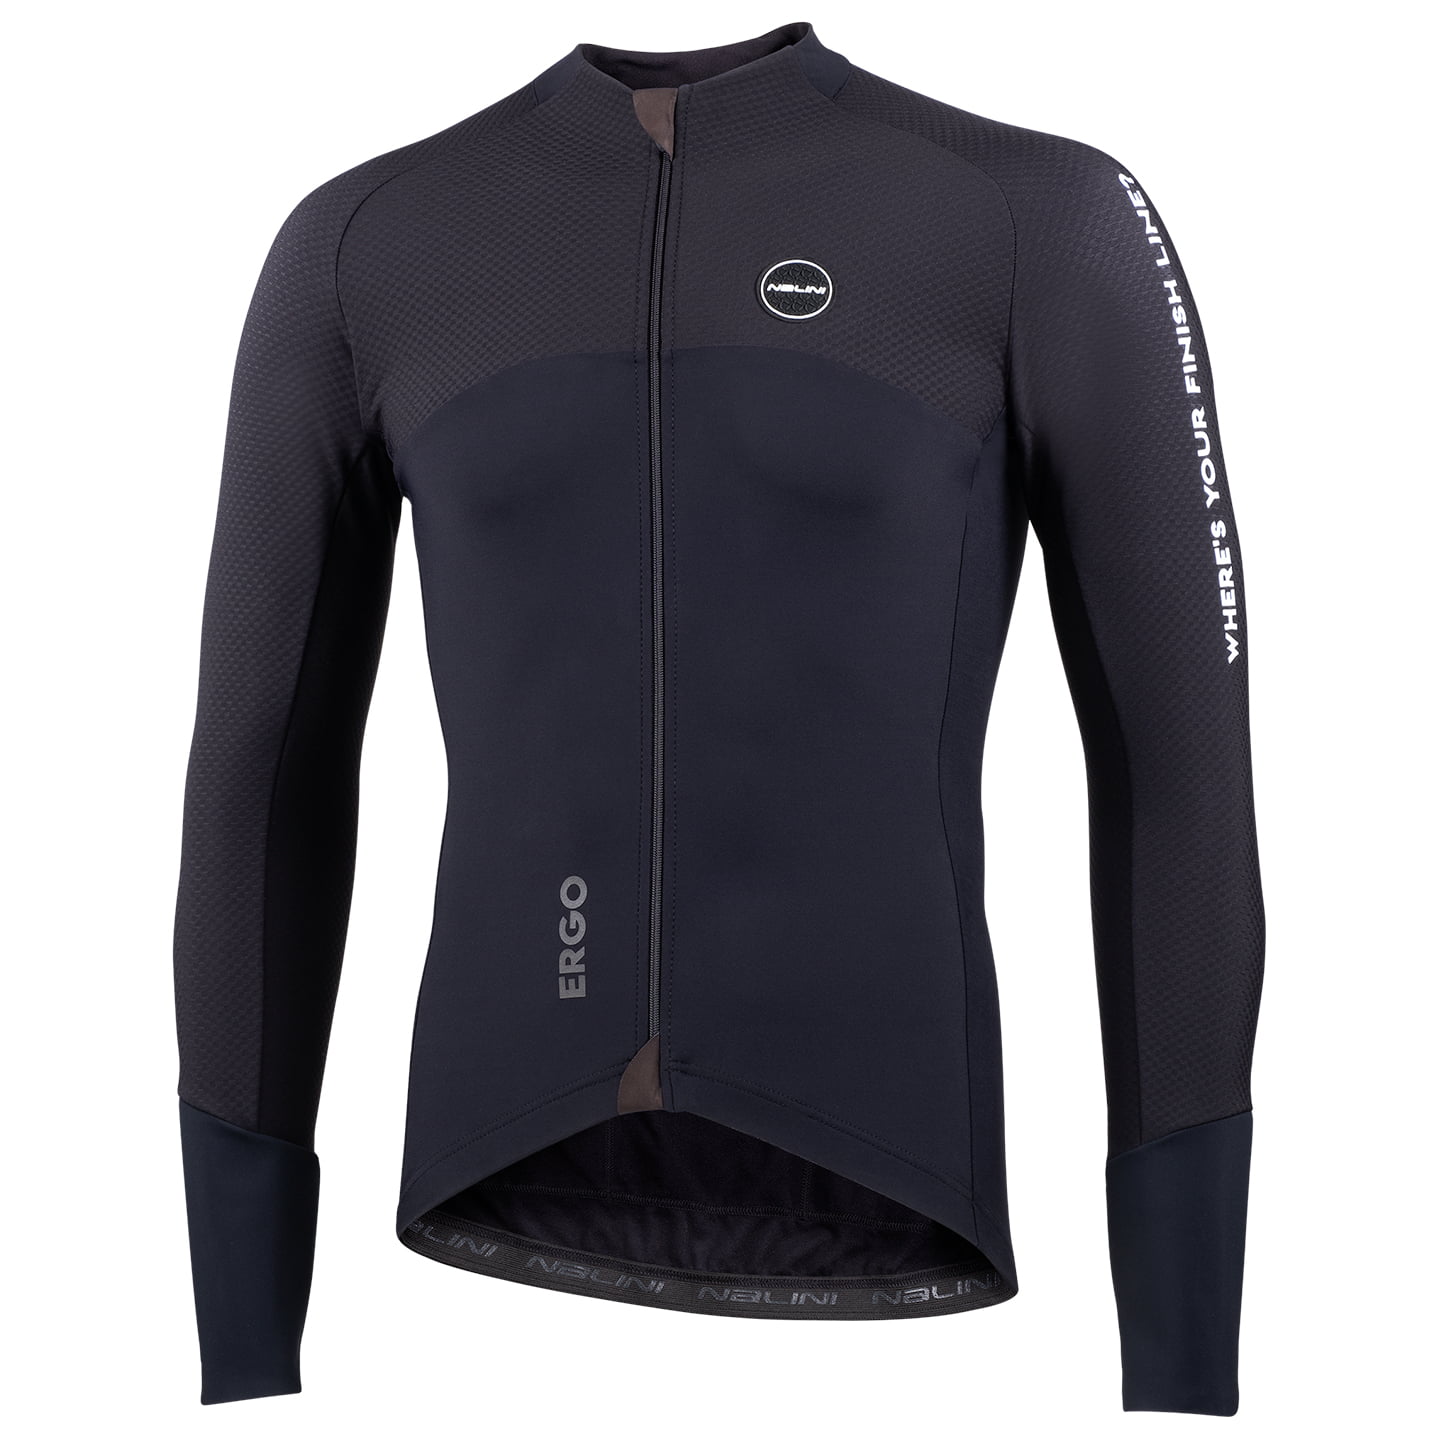 NALINI Trikotjacke New Ergo XWarm Jersey / Jacket, for men, size 2XL, Winter jacket, Cycling clothing